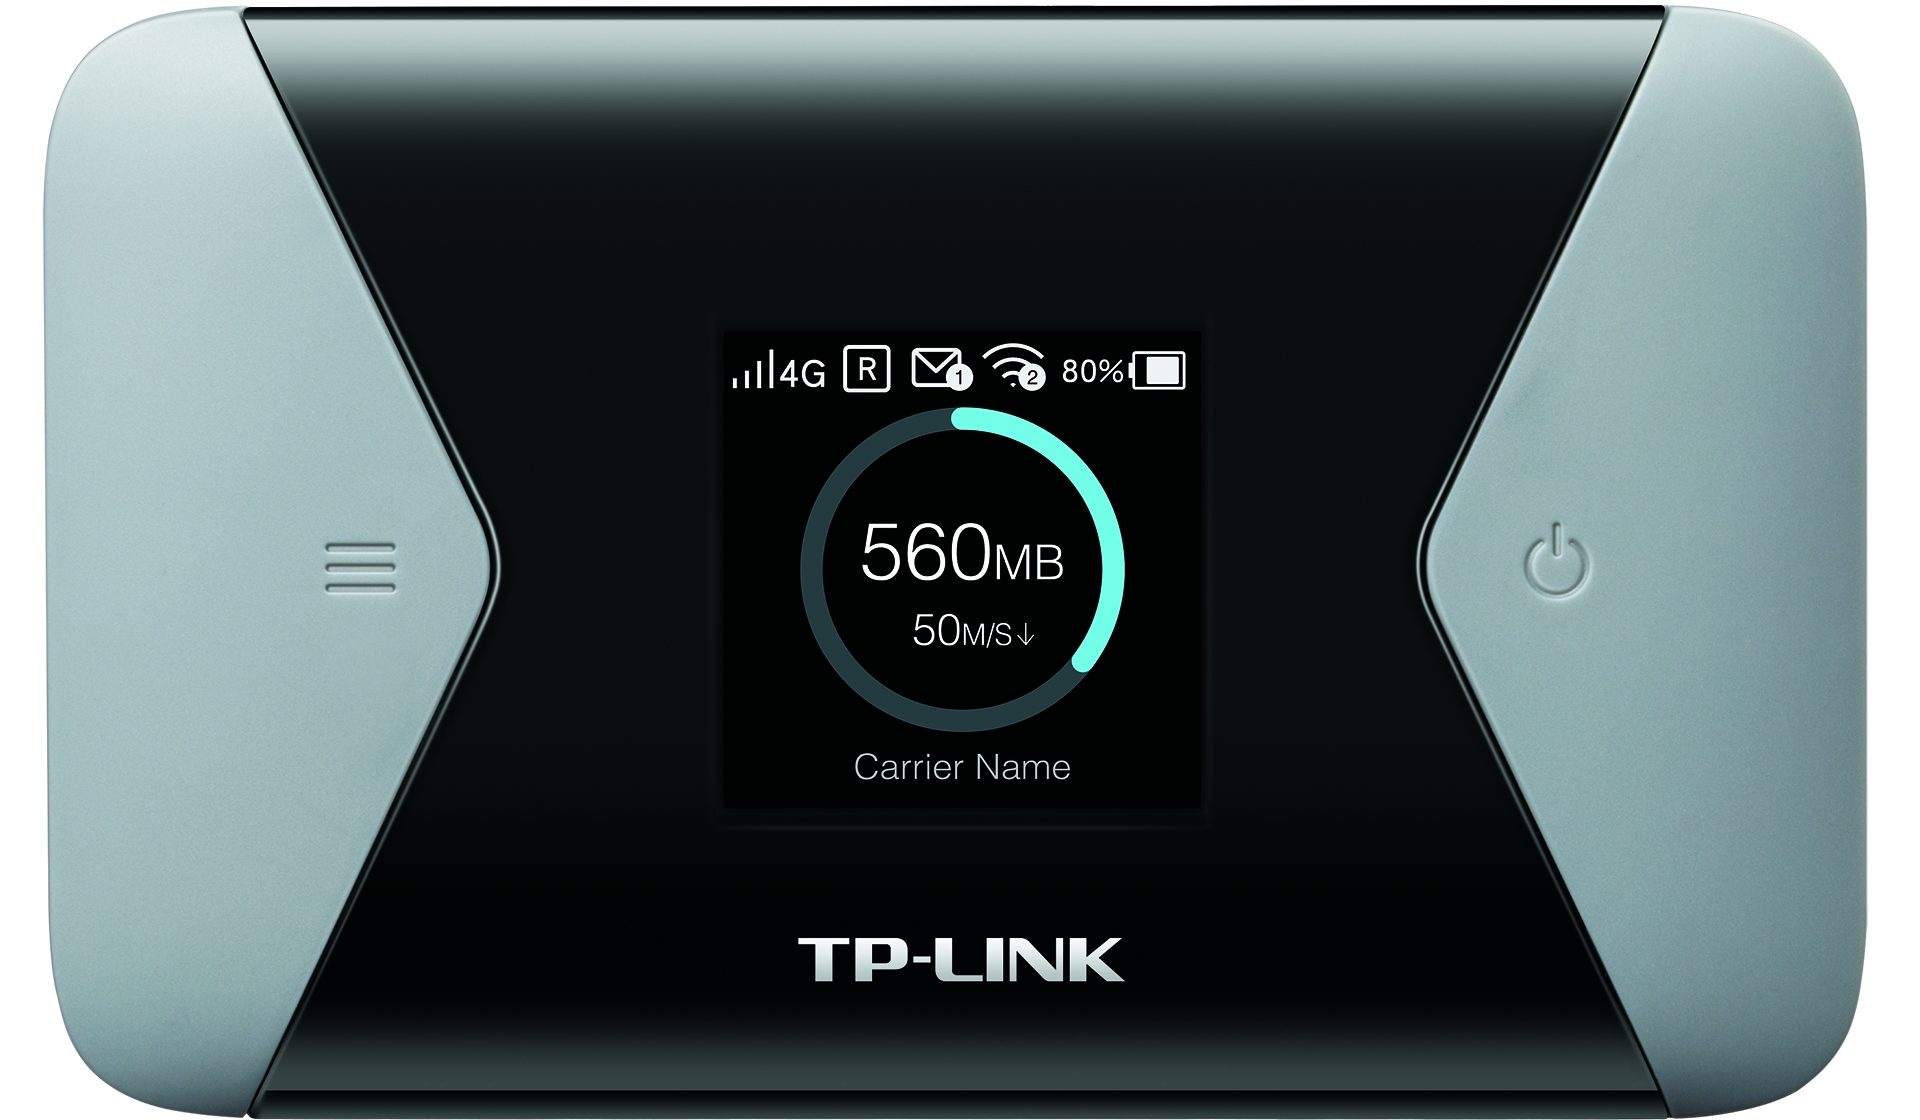 Dwa nowe przenośne hotspoty LTE od TP-Link